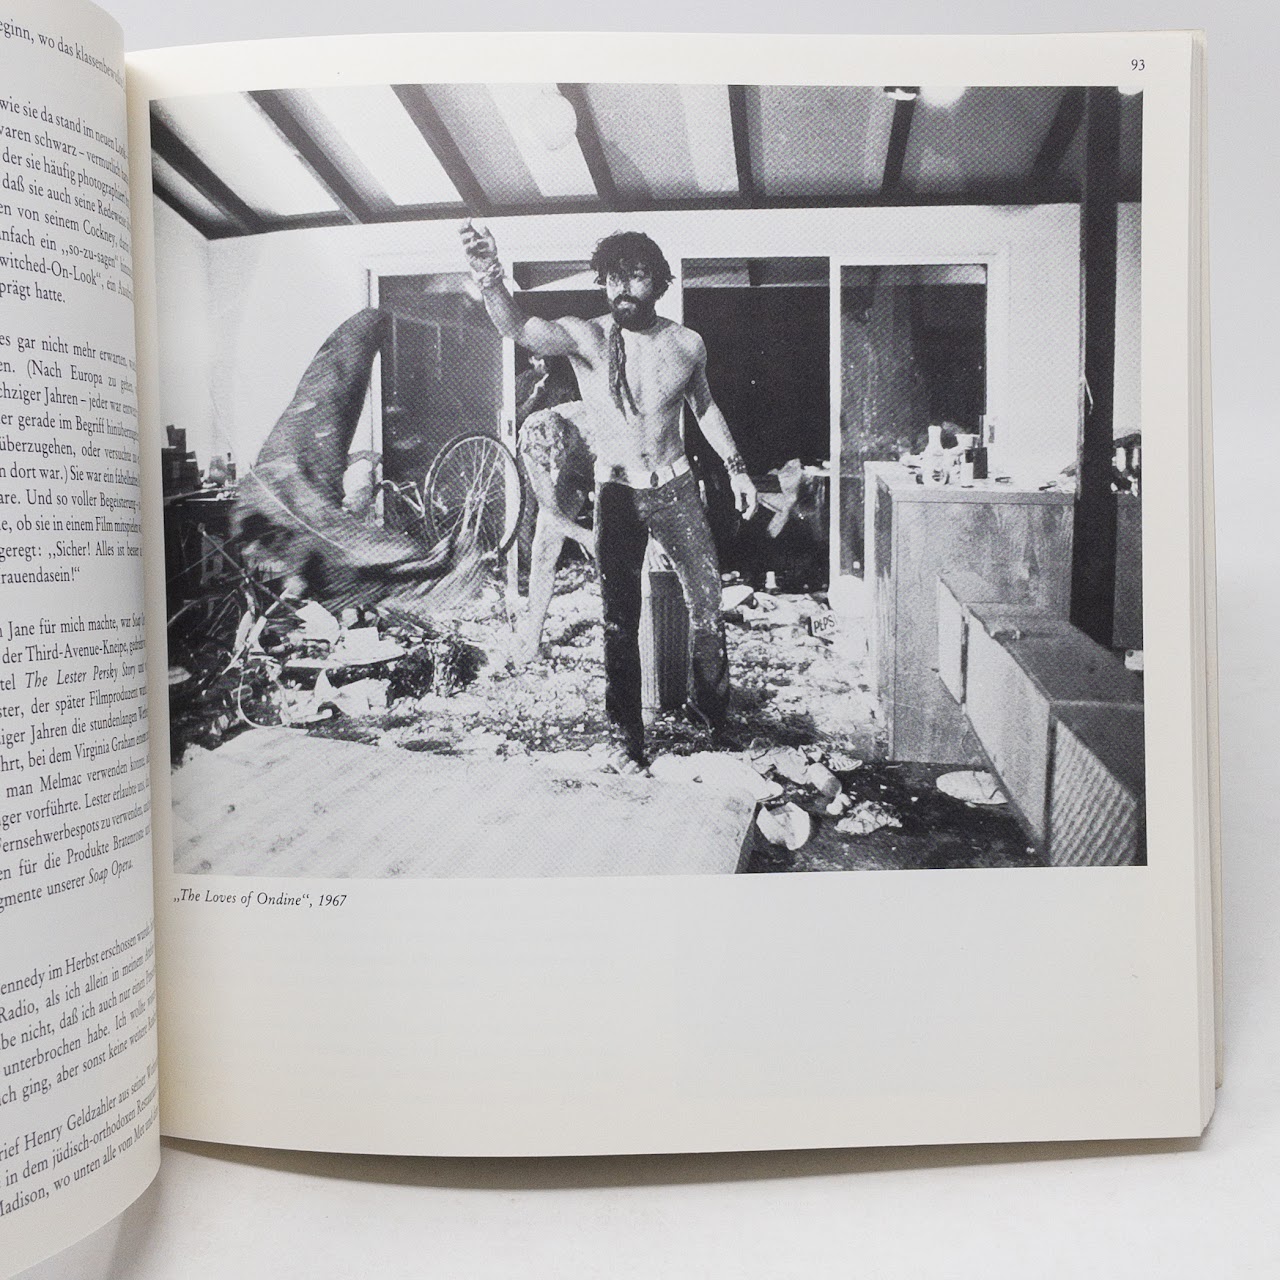 Andy Warhol Pictures From 1961-1981 Kestner Gesellschaft